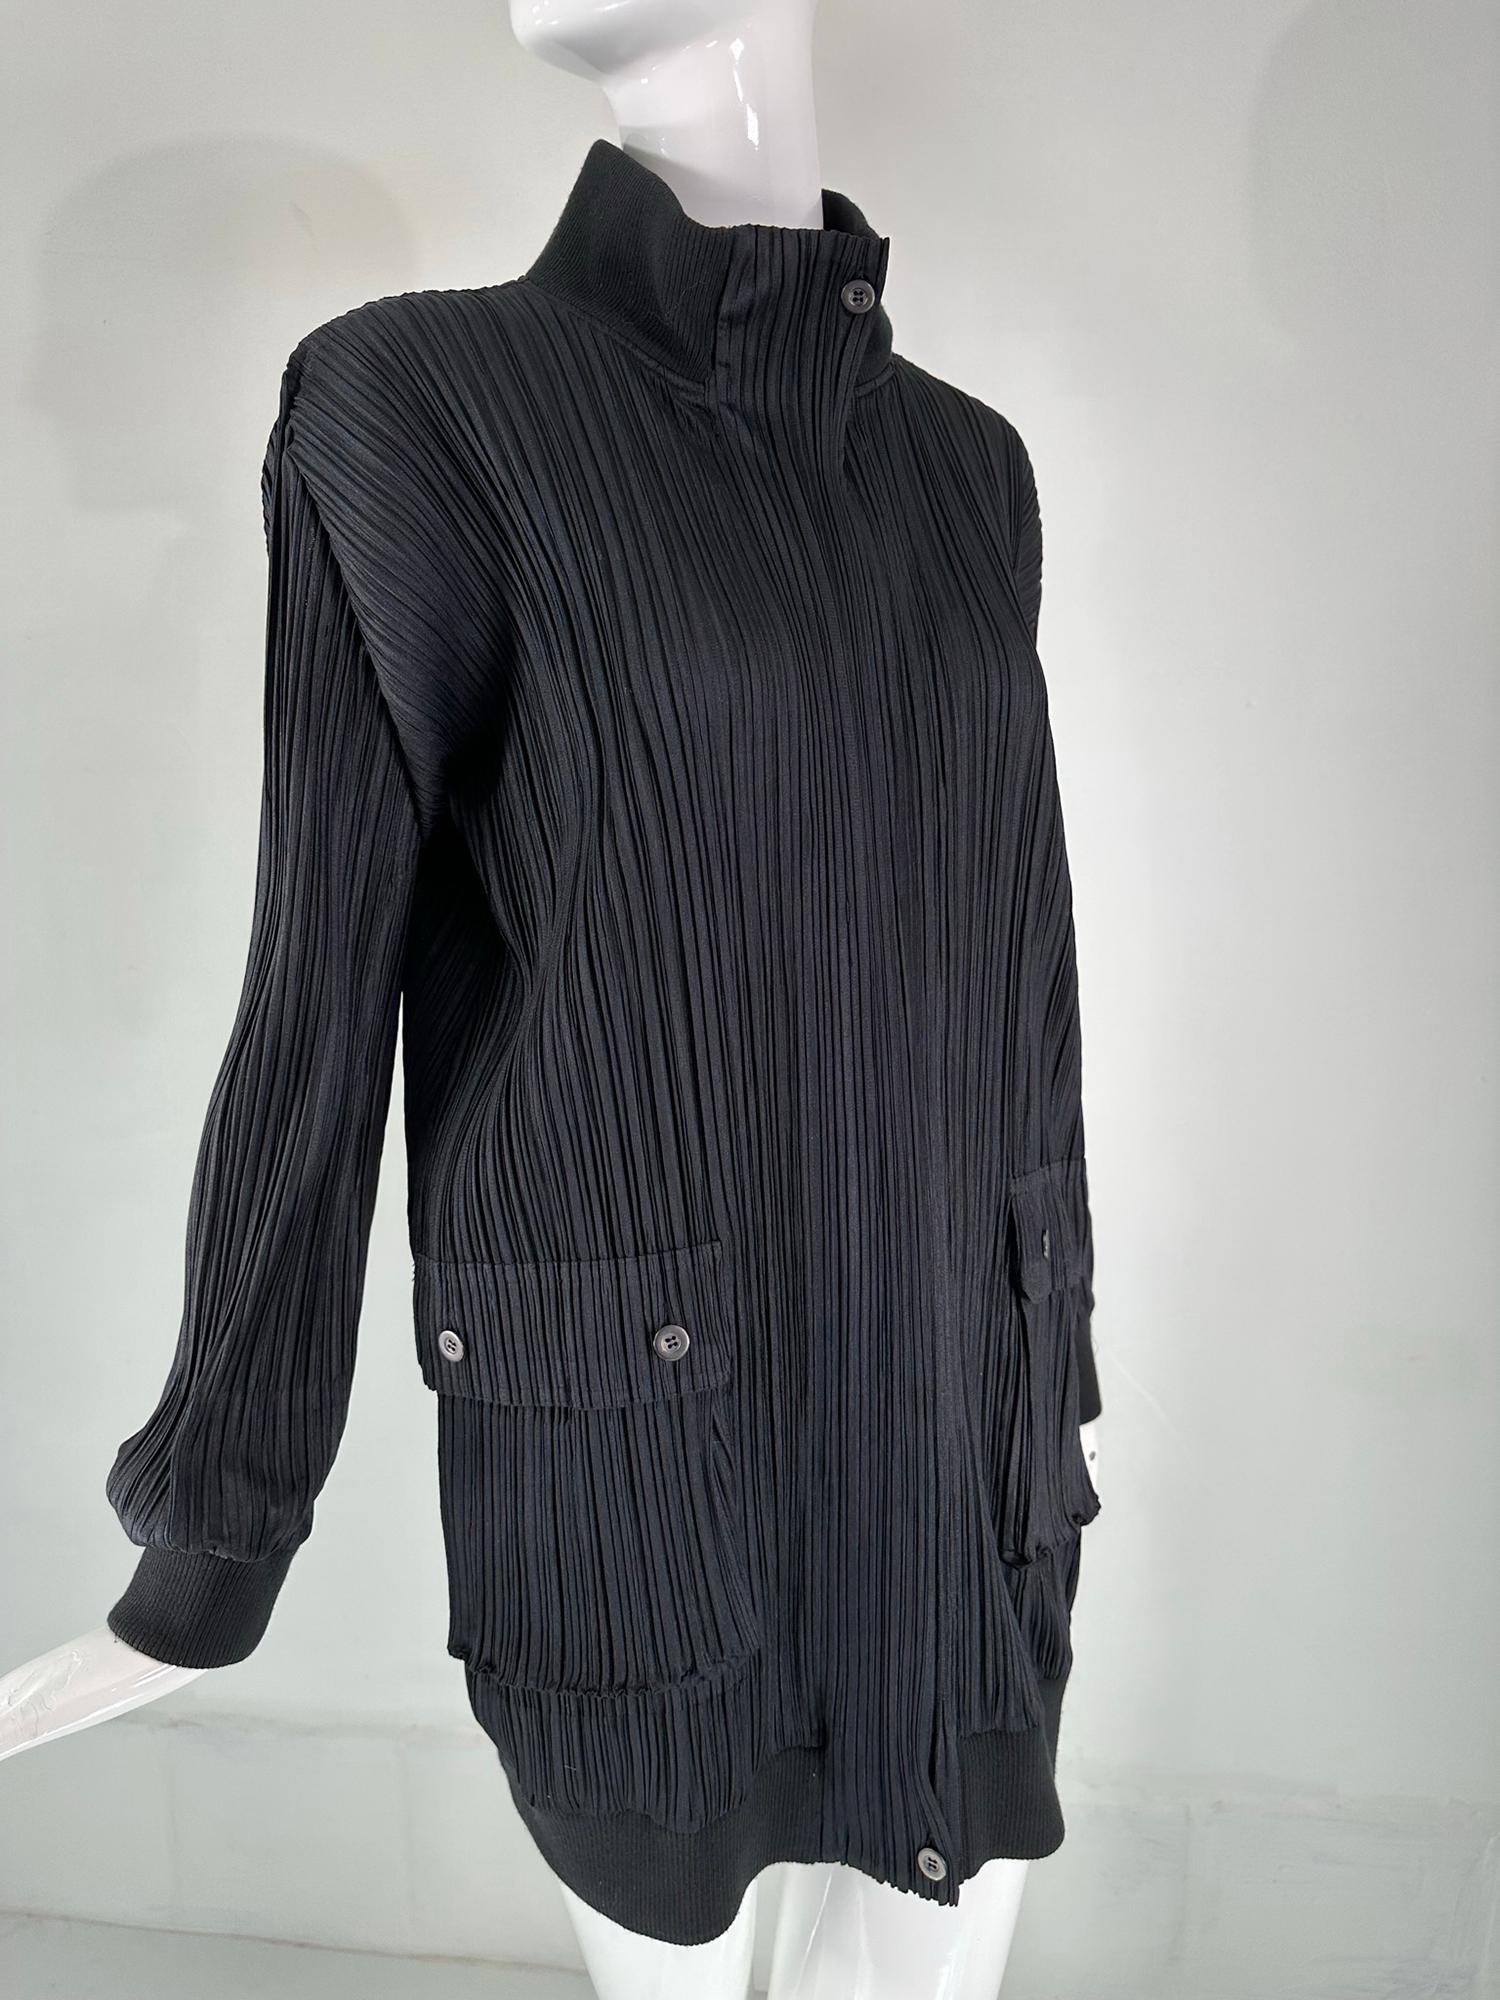 Issey Miyake Pleats Please Black Funnel Neck Hidden Zipper Front Long Jacket 3 For Sale 8